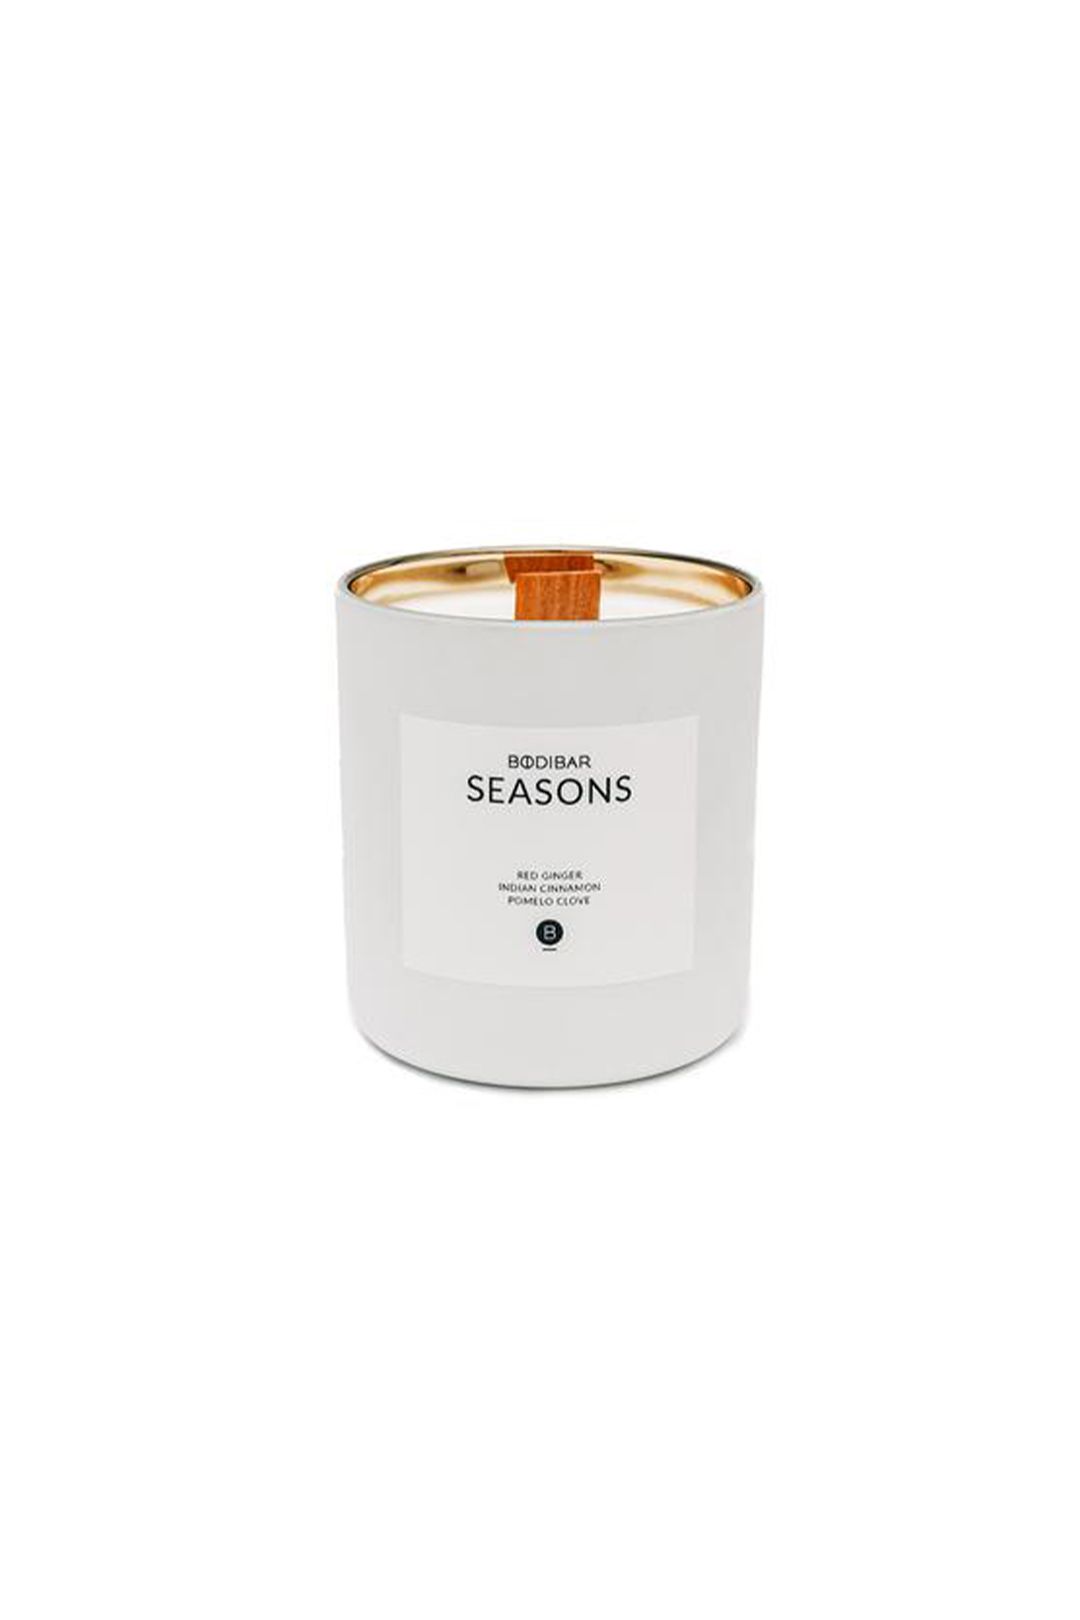 bodibar-seasons-signature-luxe-candles